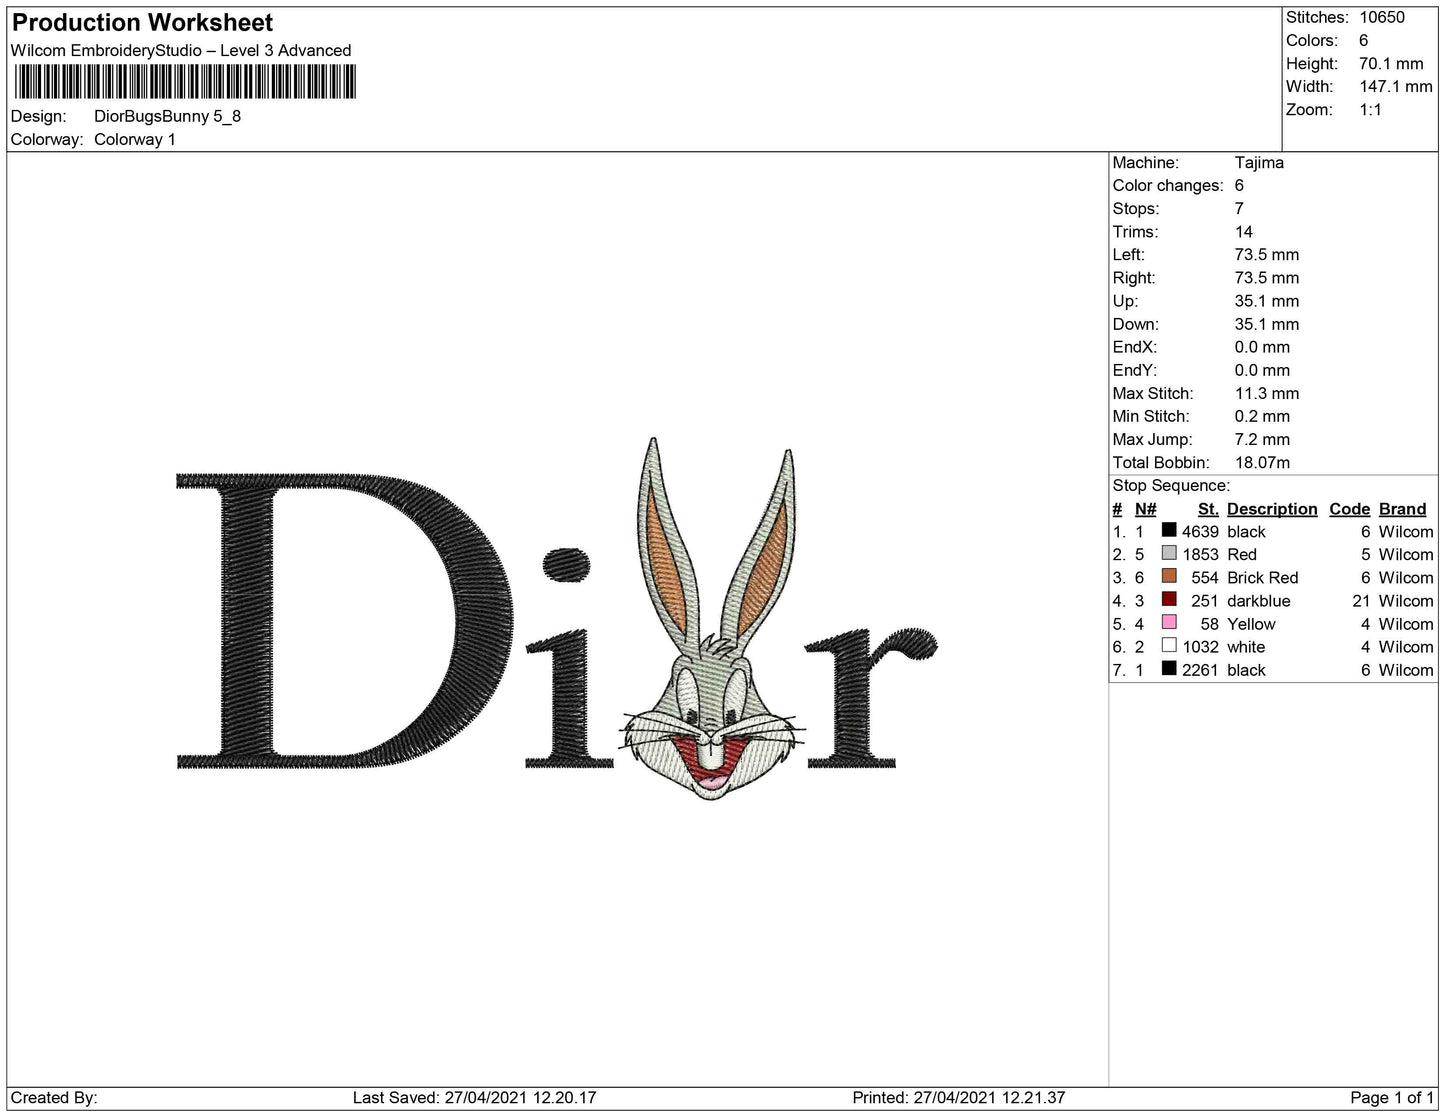 Dior Bugs Bunny